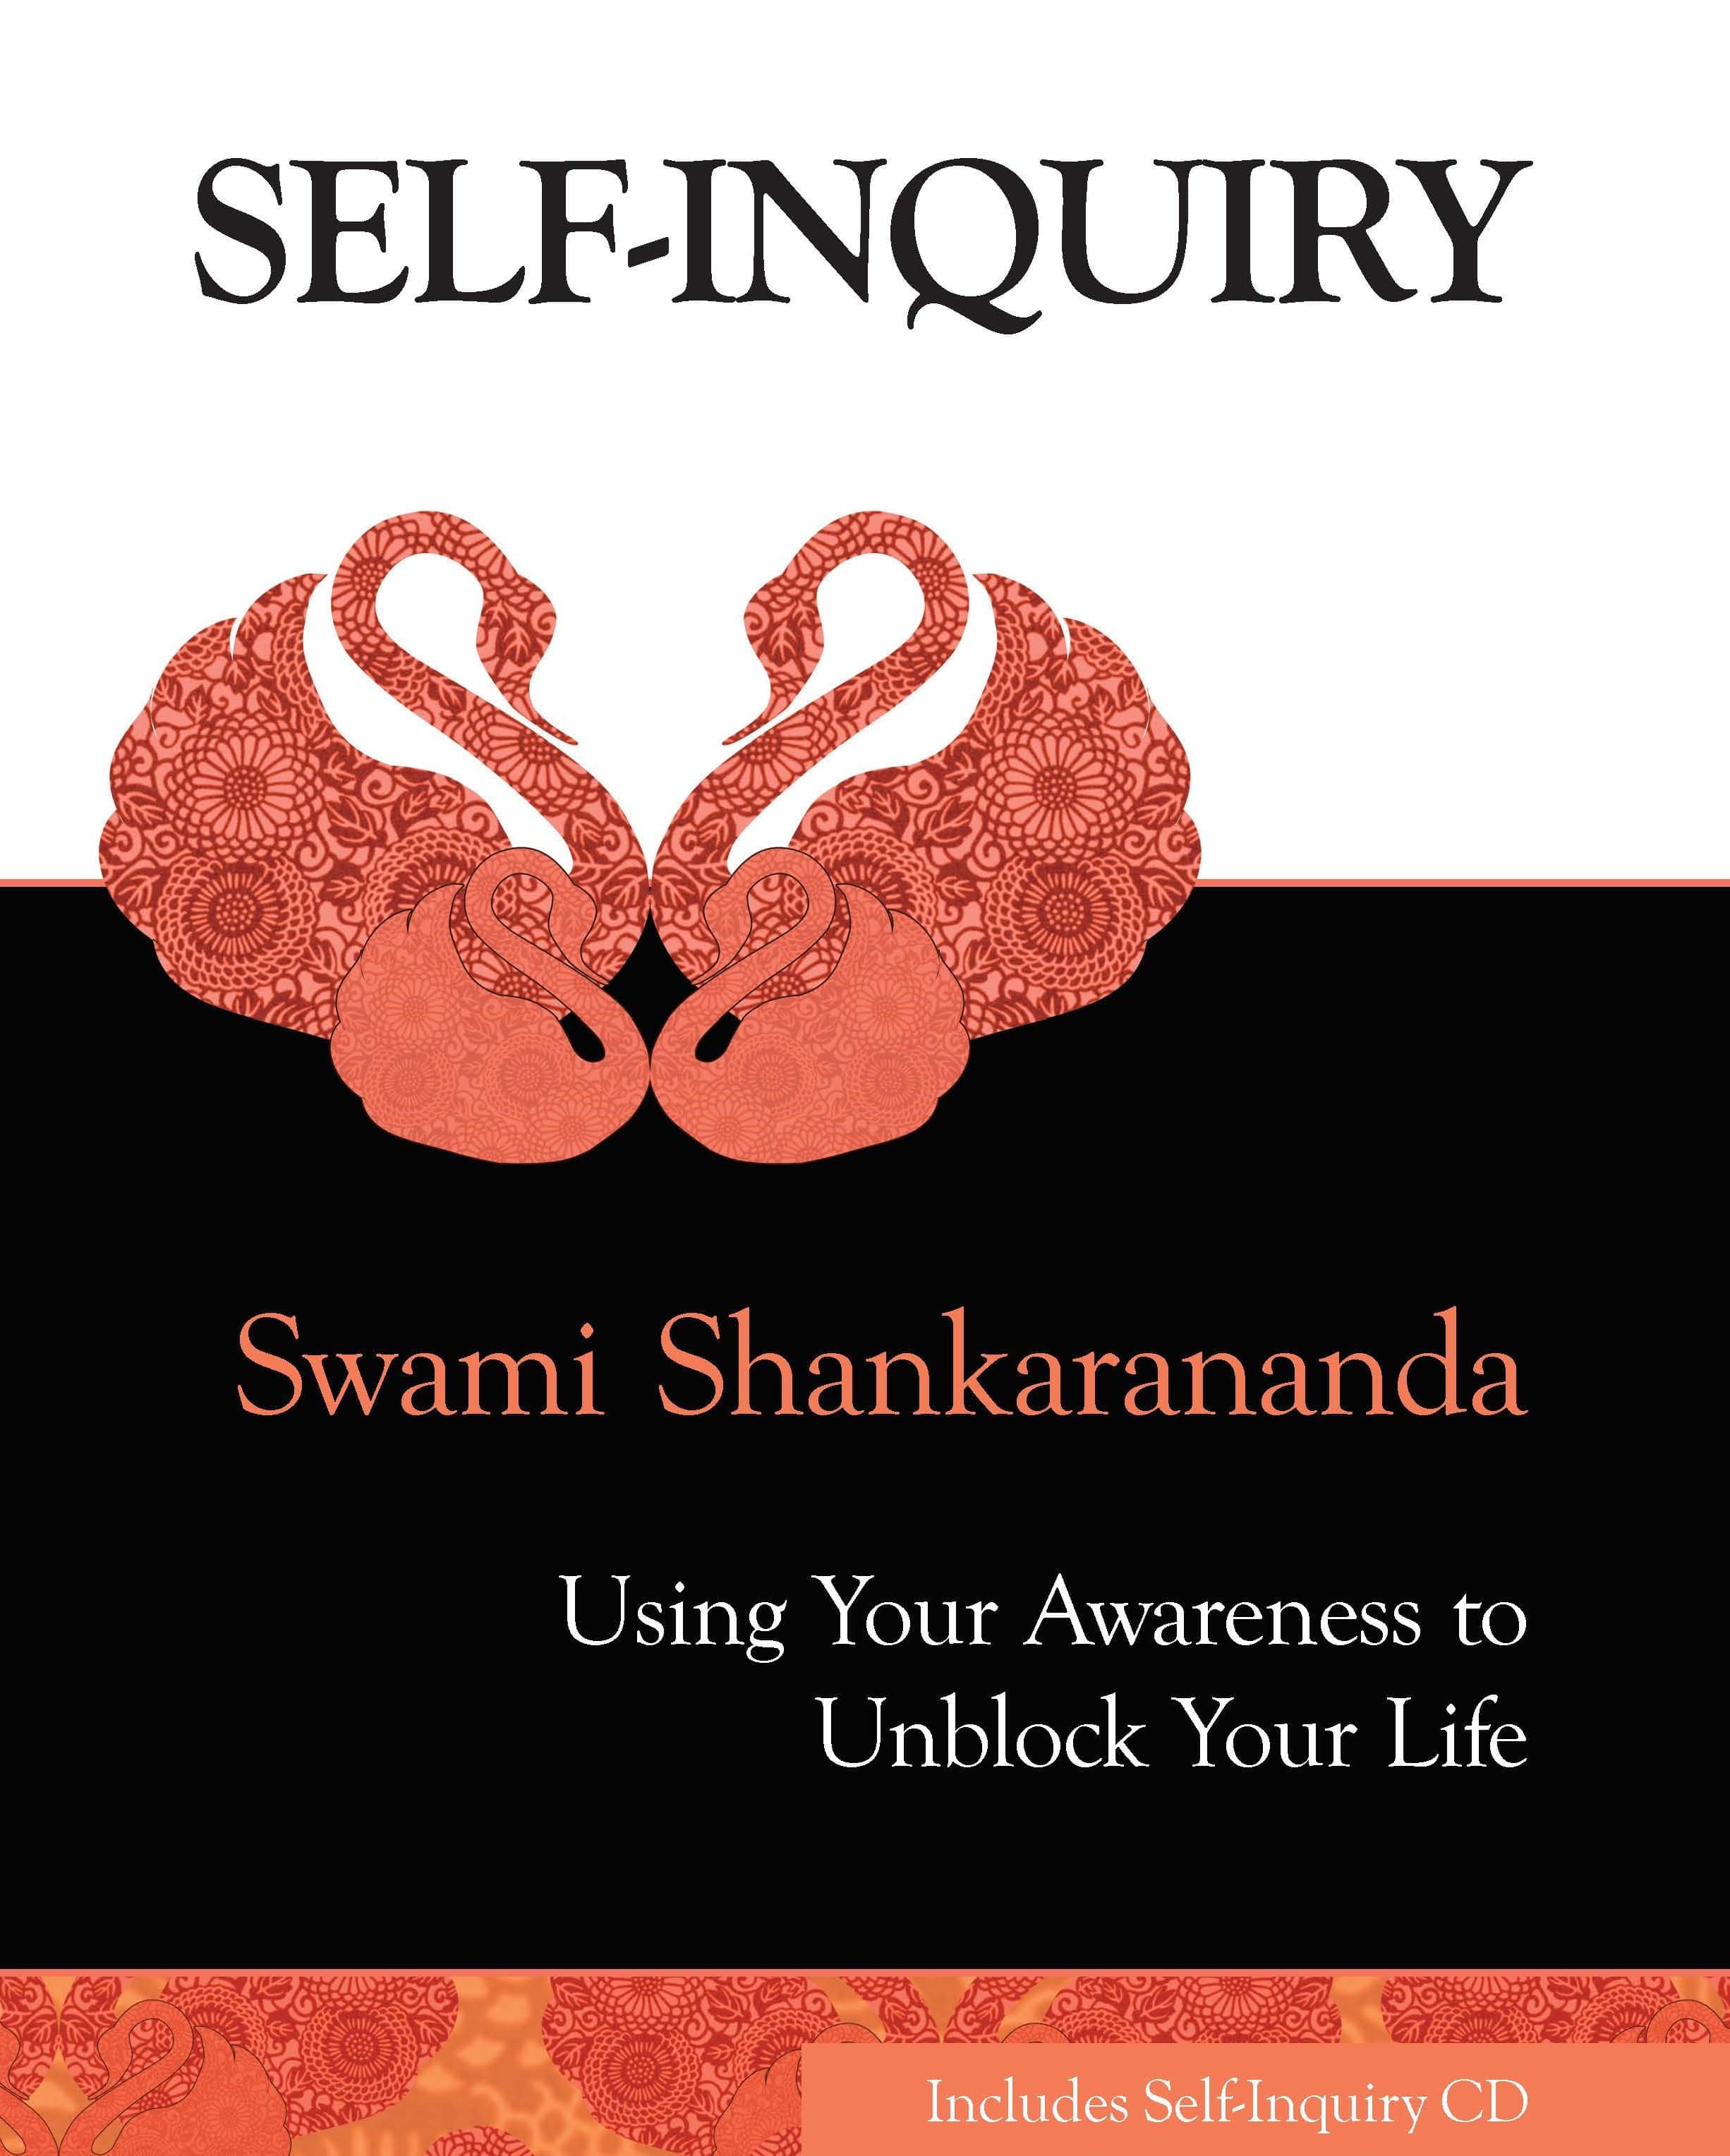 Self-inquiry CD - Track 1 - Guided Chakra Meditation - Swami Shankarananda